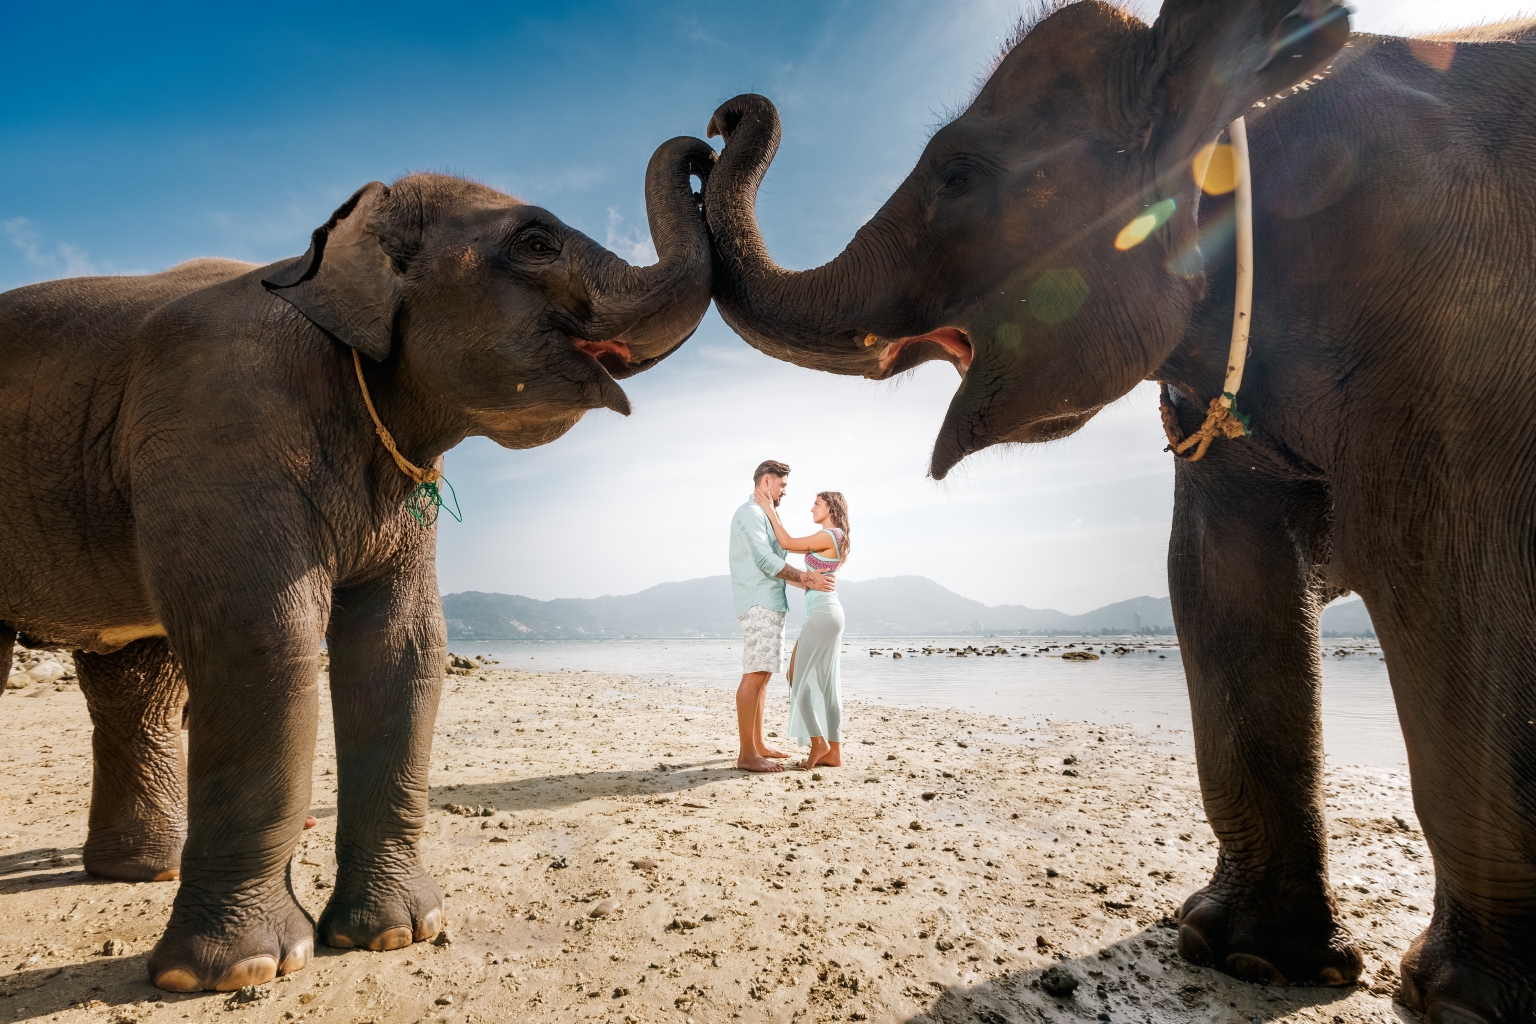 couple photoshoot with elephants at lucky beach phuket